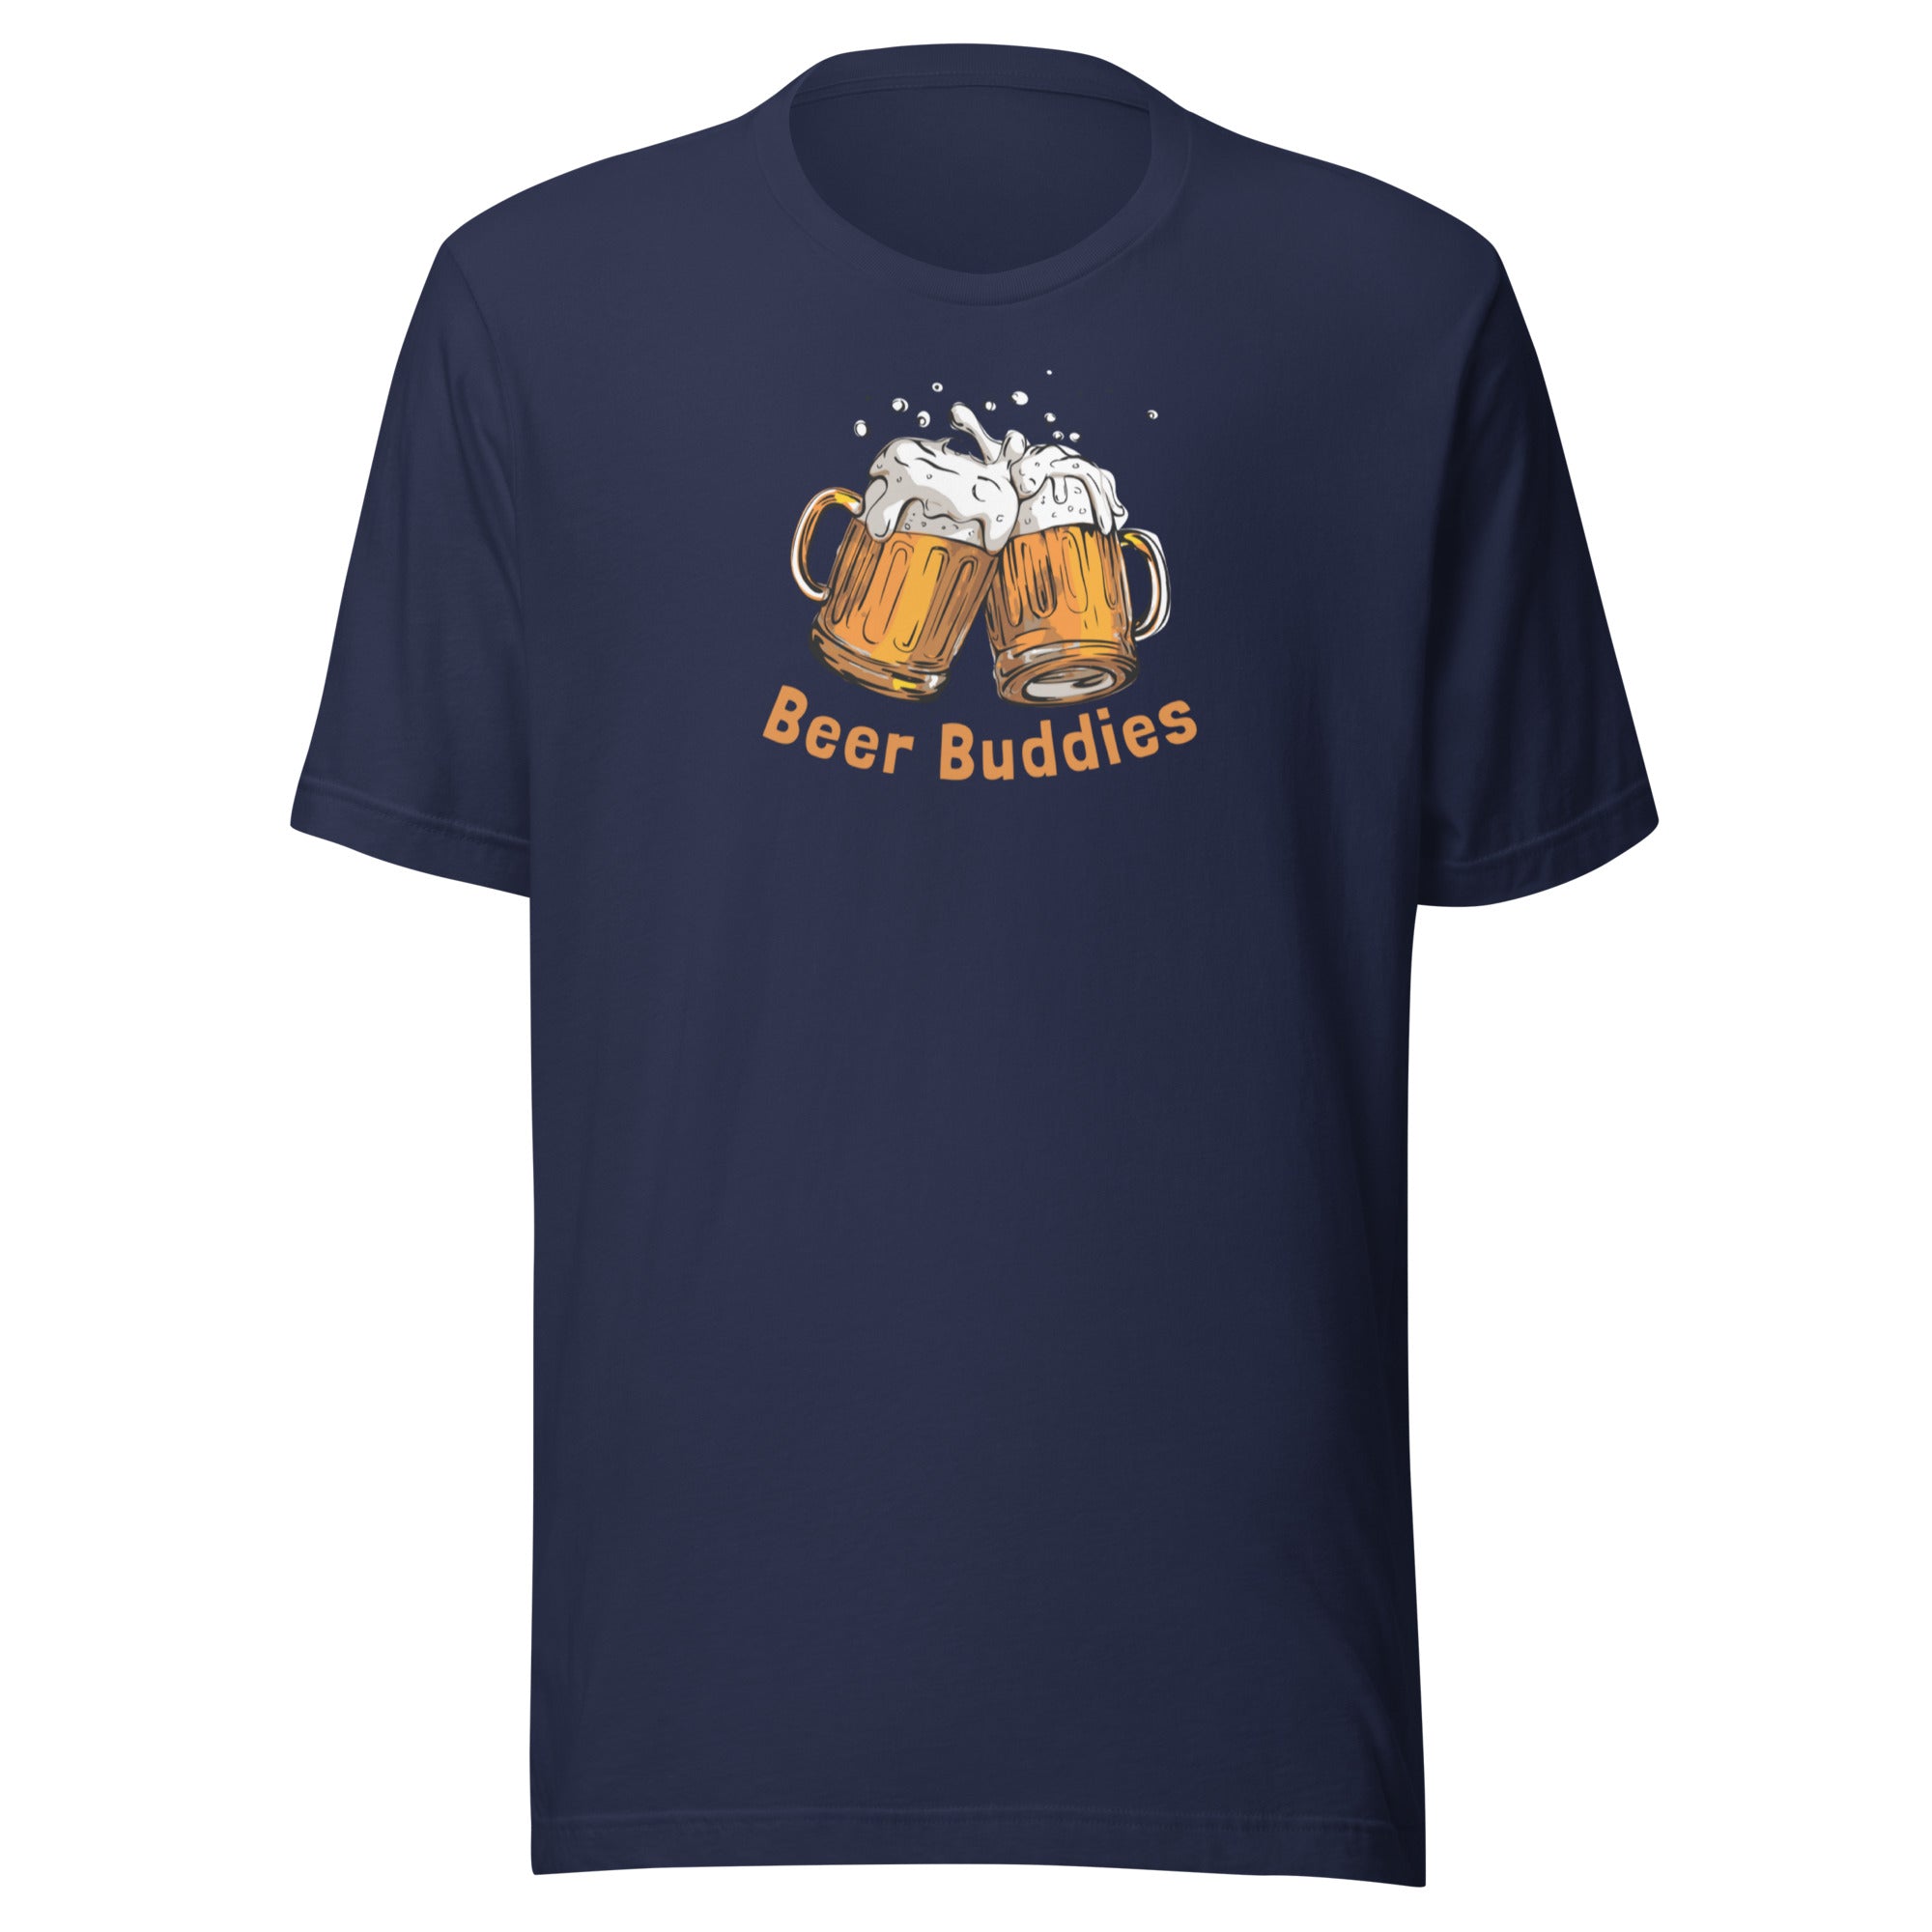 Beer buddies Men t-shirt